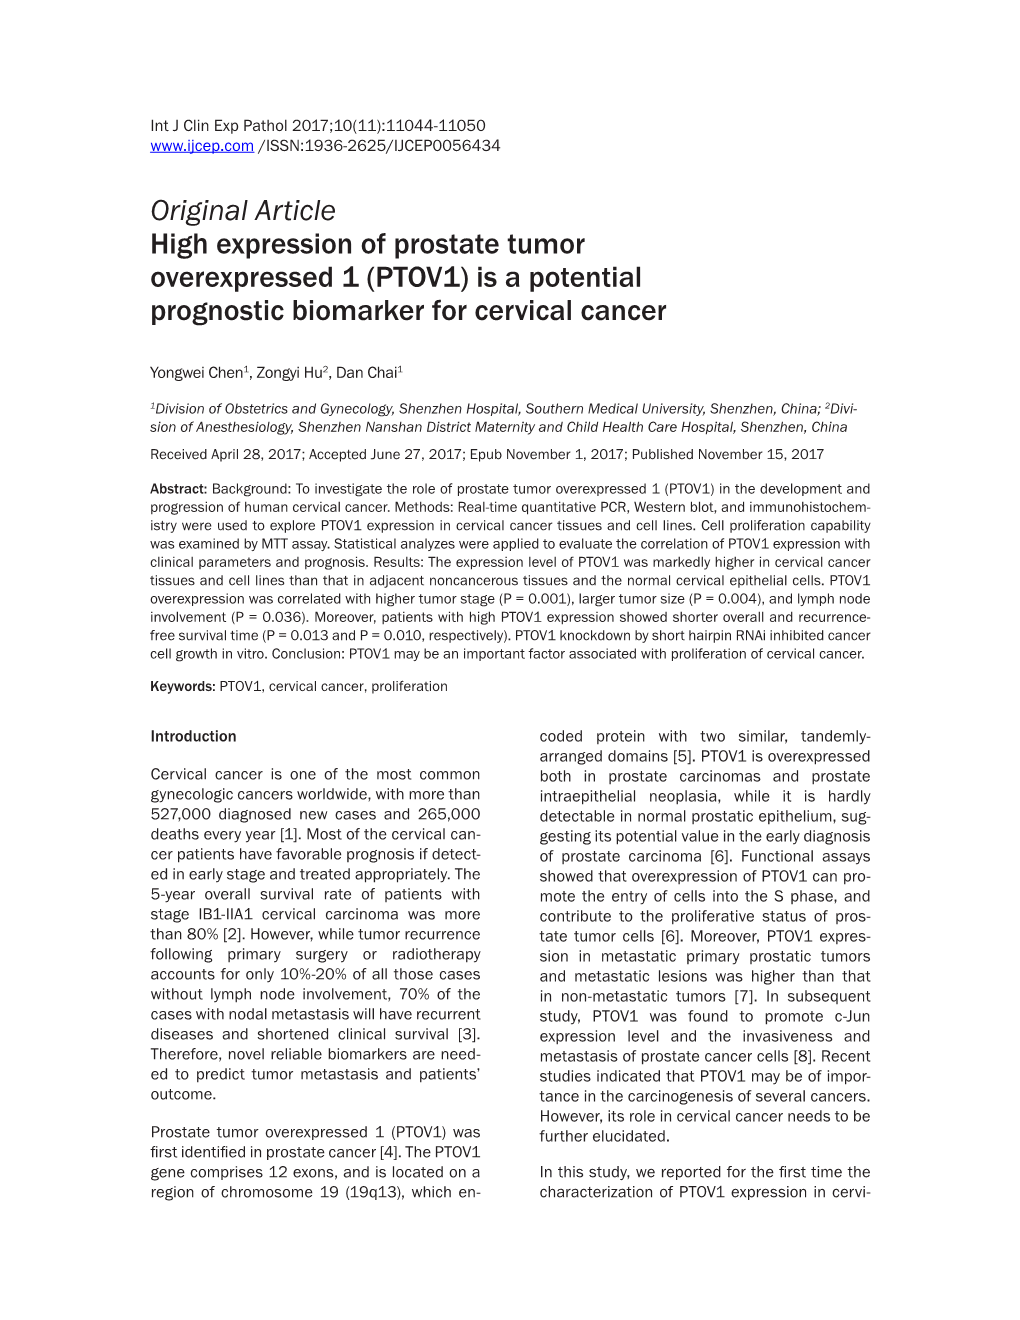 Original Article High Expression of Prostate Tumor Overexpressed 1 (PTOV1) Is a Potential Prognostic Biomarker for Cervical Cancer